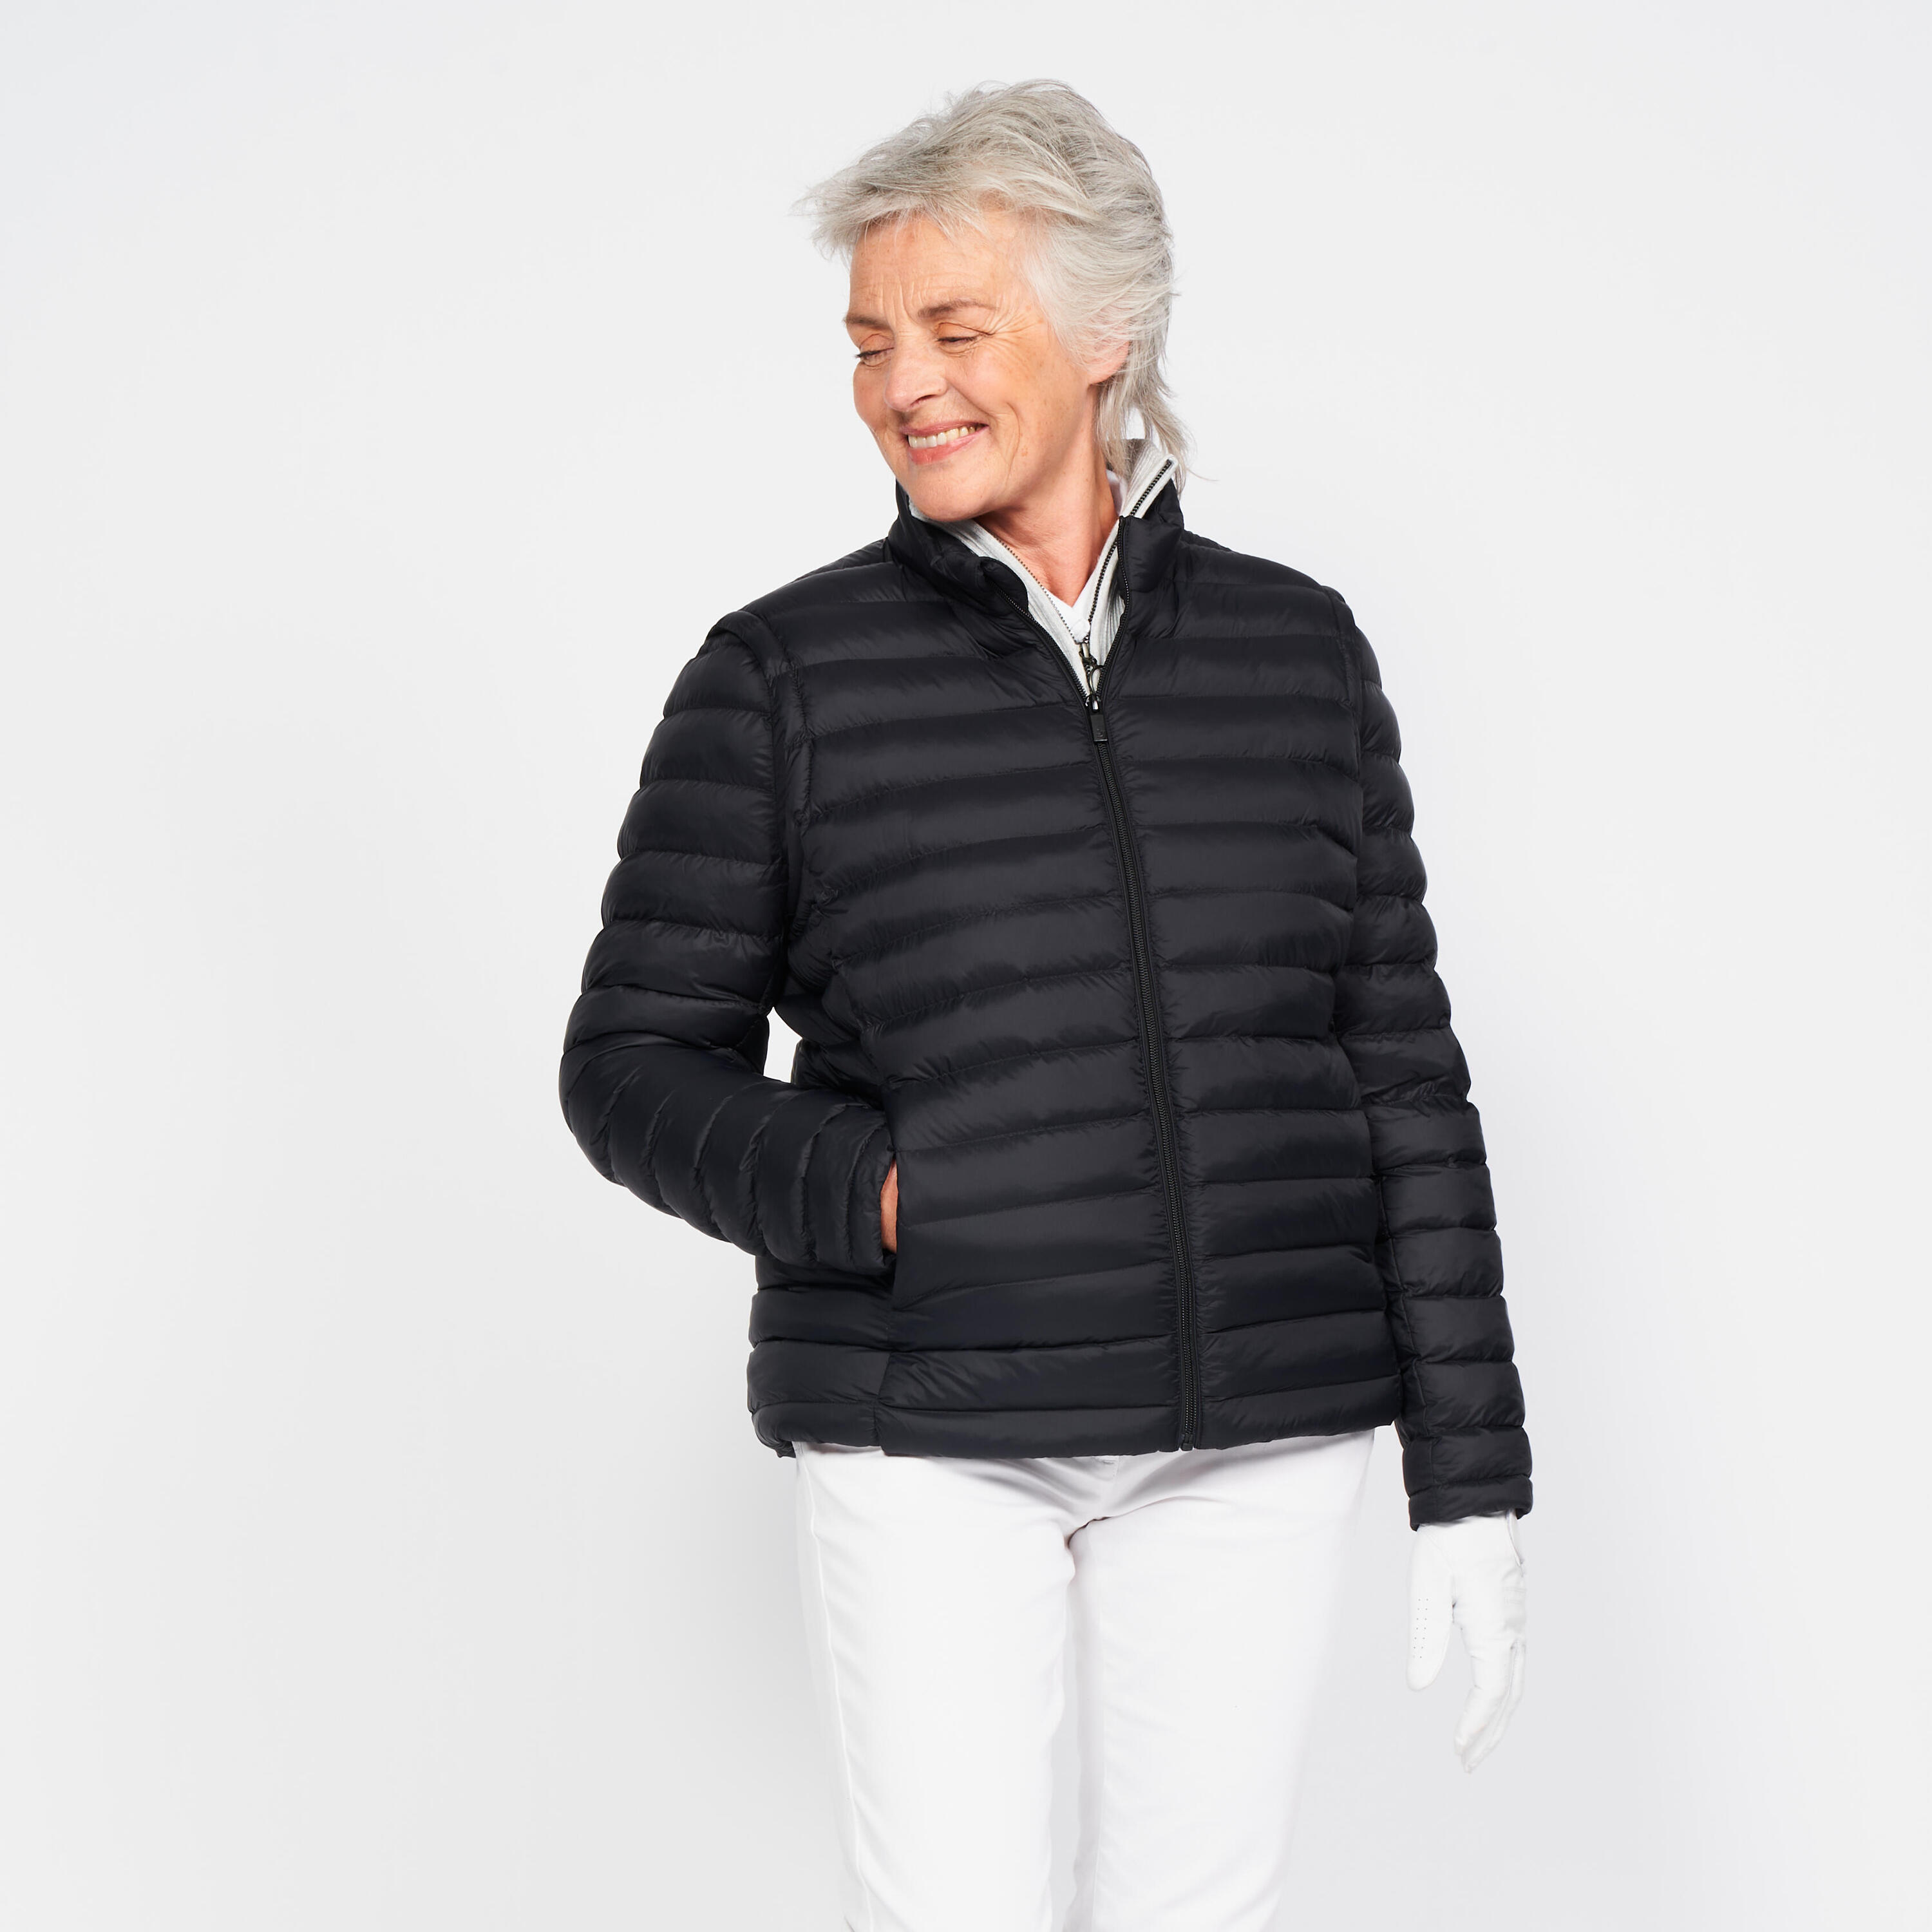 INESIS Women's golf long sleeved down jacket - CW900 Heatflex black